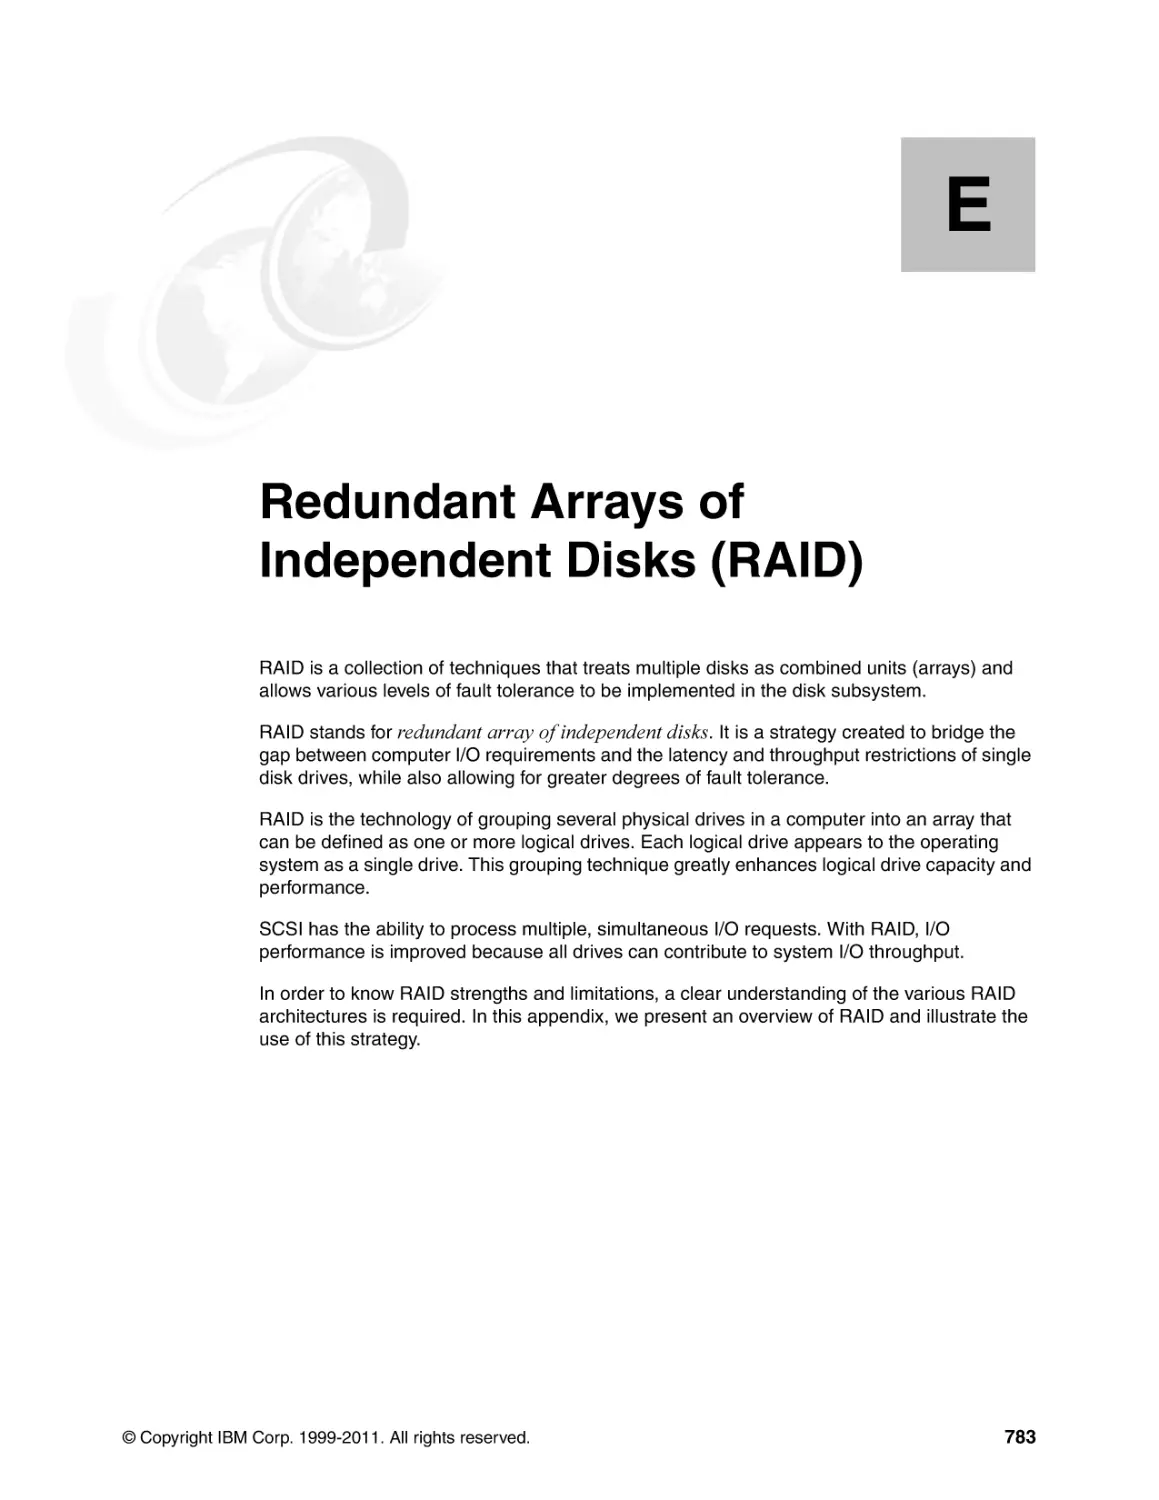 Appendix E. Redundant Arrays of Independent Disks (RAID)